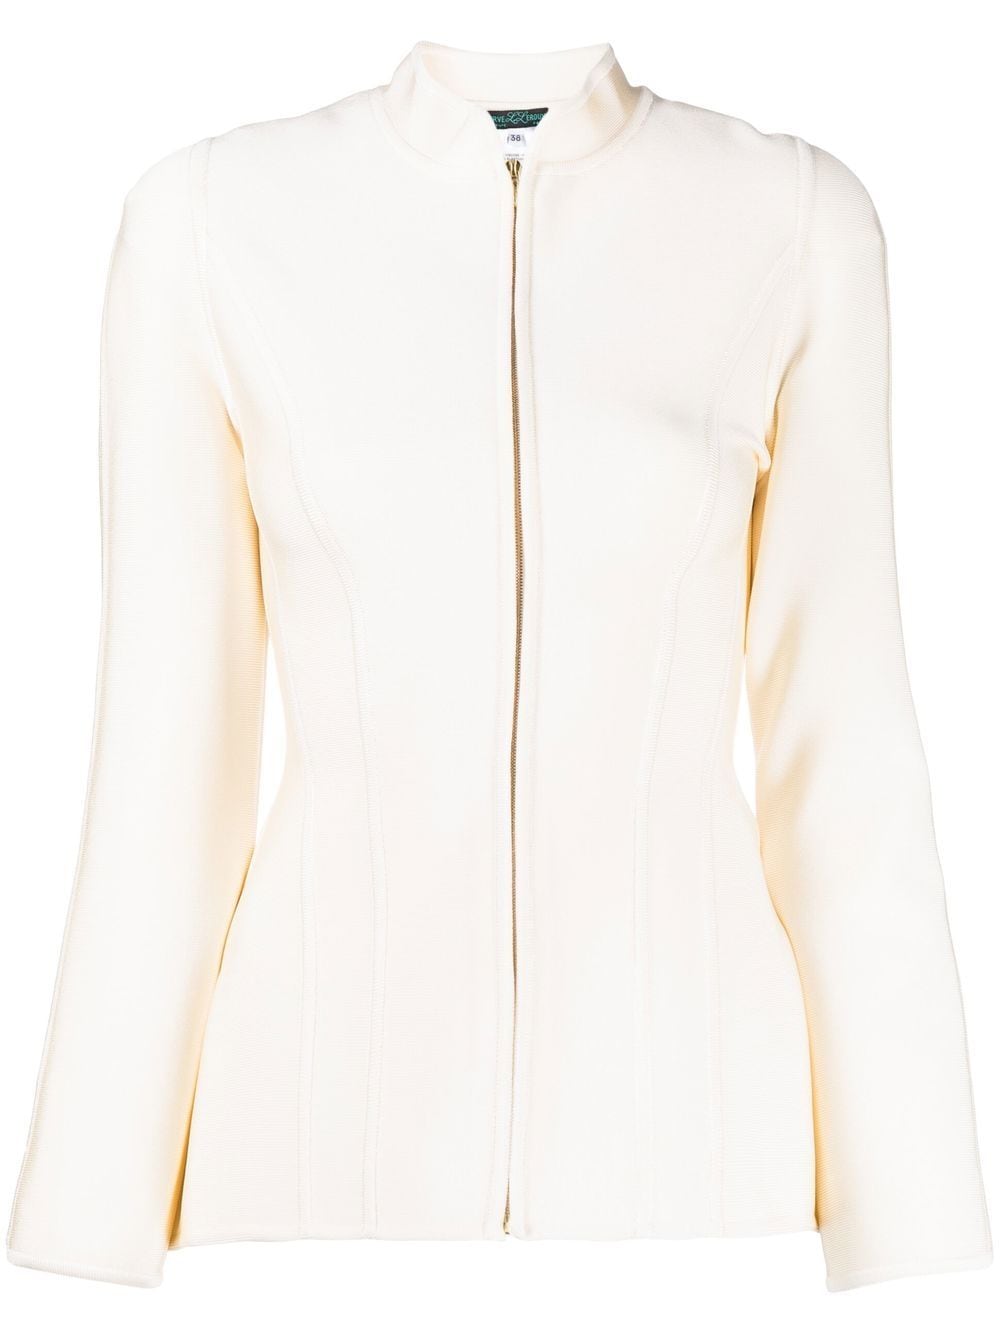 Herve L Leroux Zip-up Stretch Jacket In White